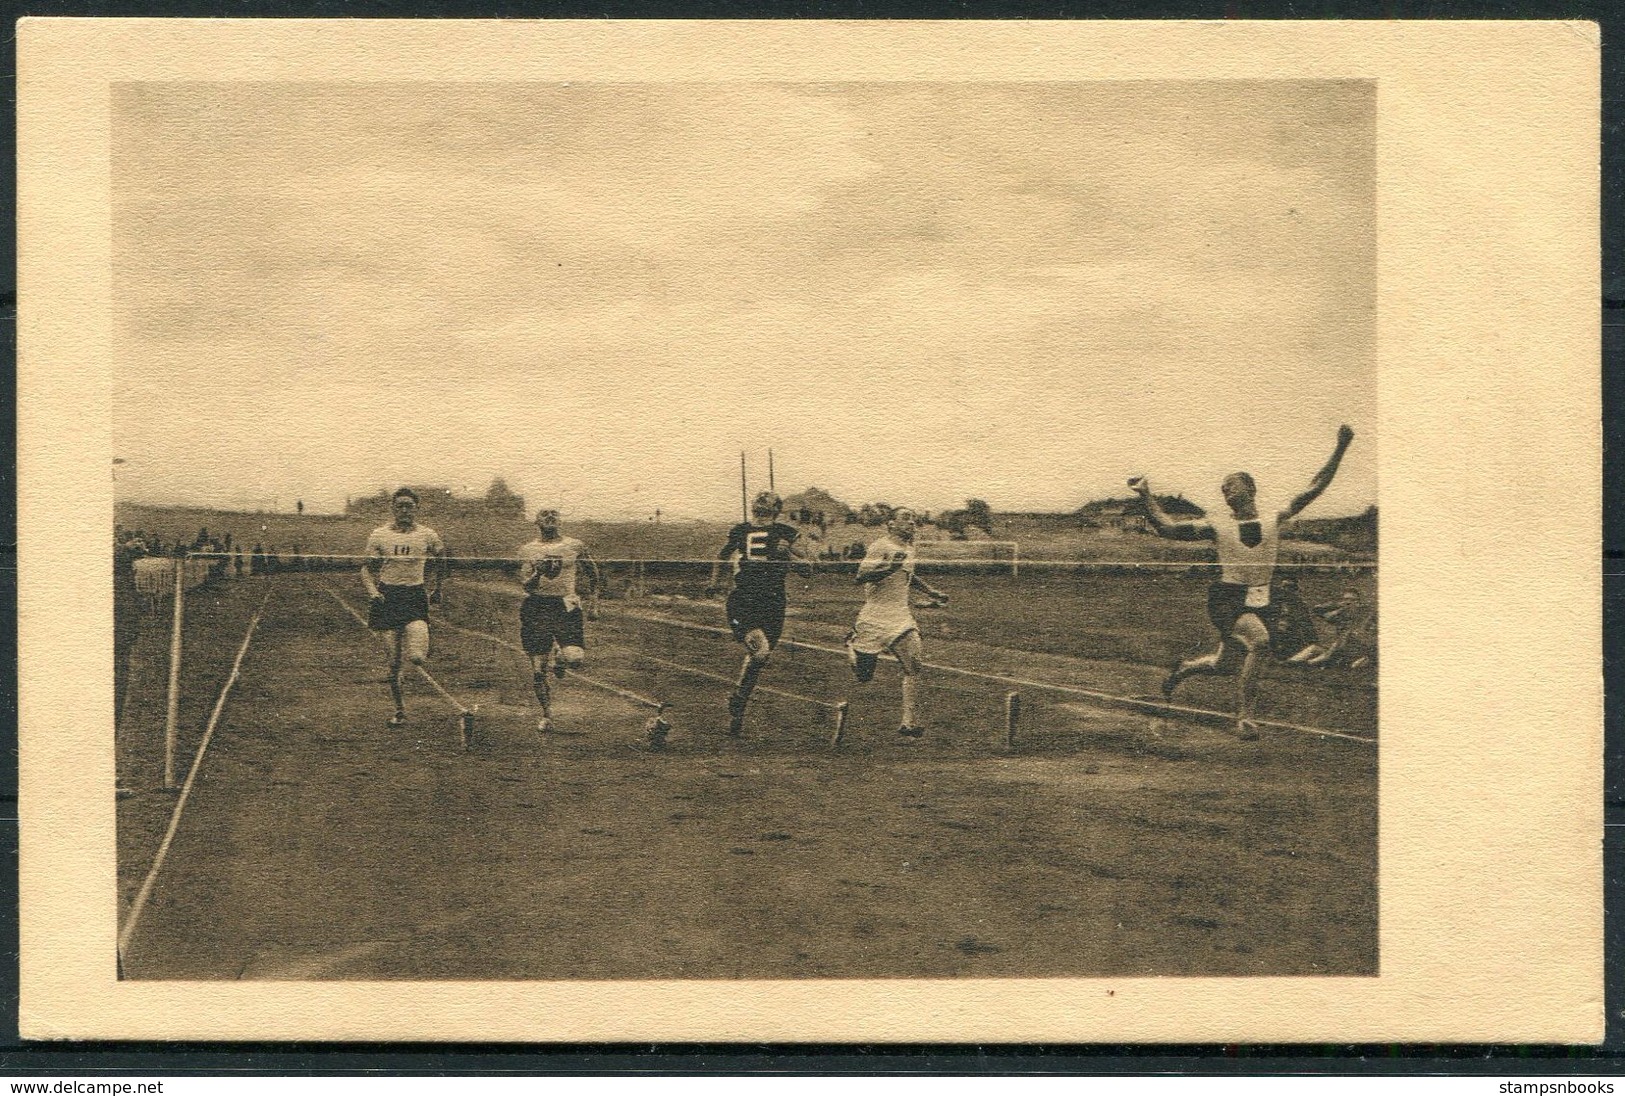 Hungary 1912 100 Yard Record Jankovich István Athletics Postcard. Hungarian Athletics Championships. 1912 Olympics - Athletics